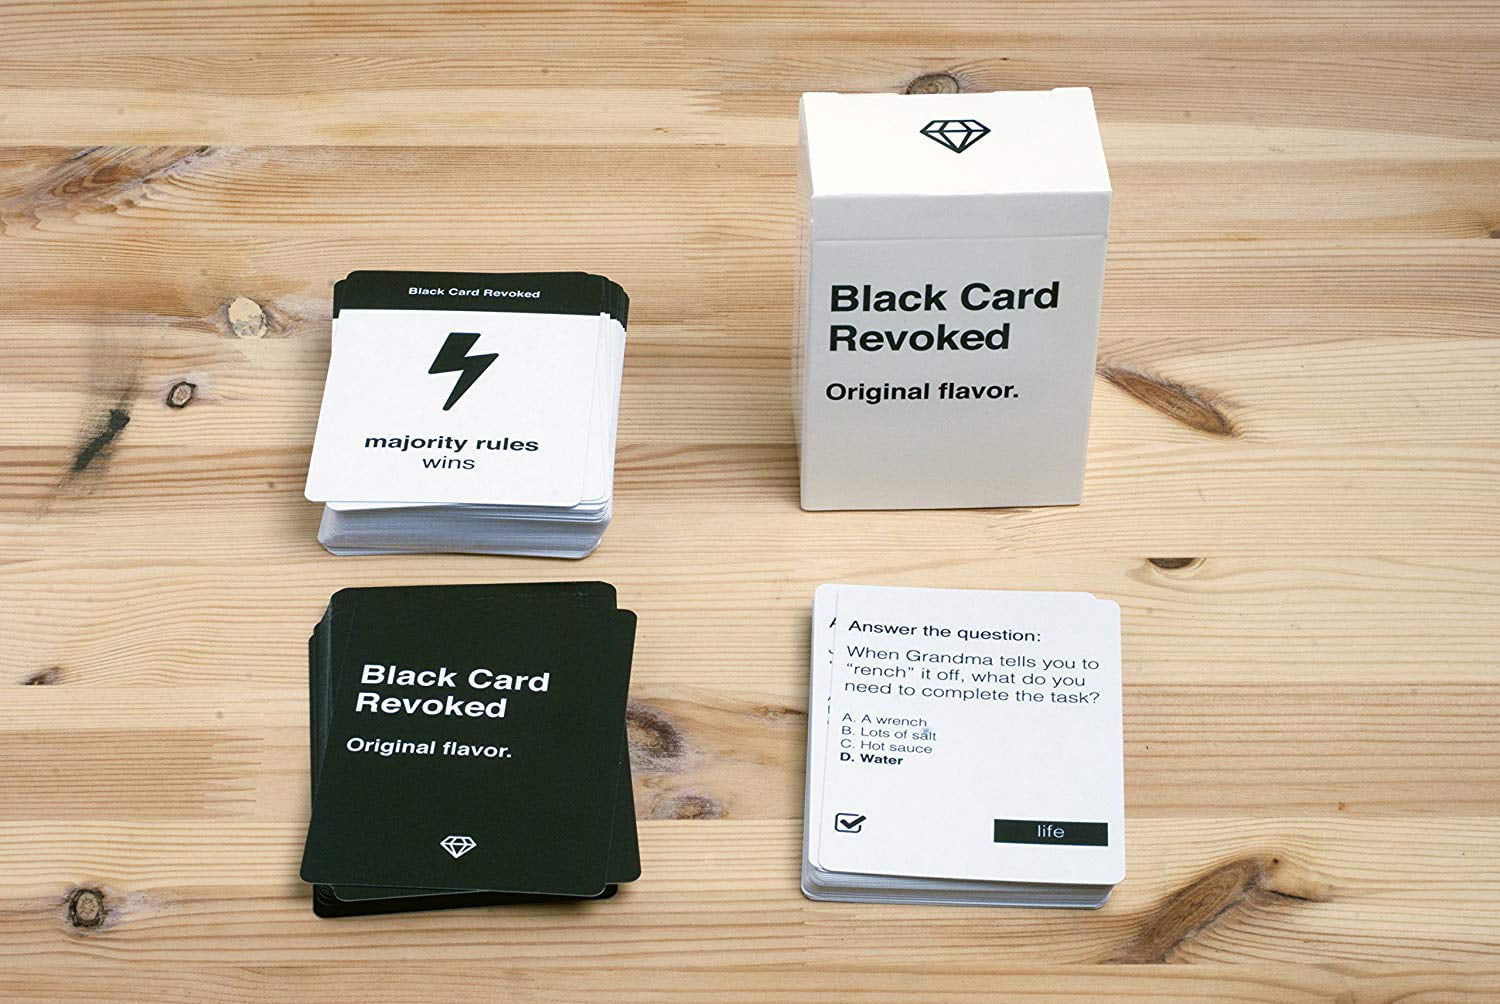 Black Card Revoked - Black History